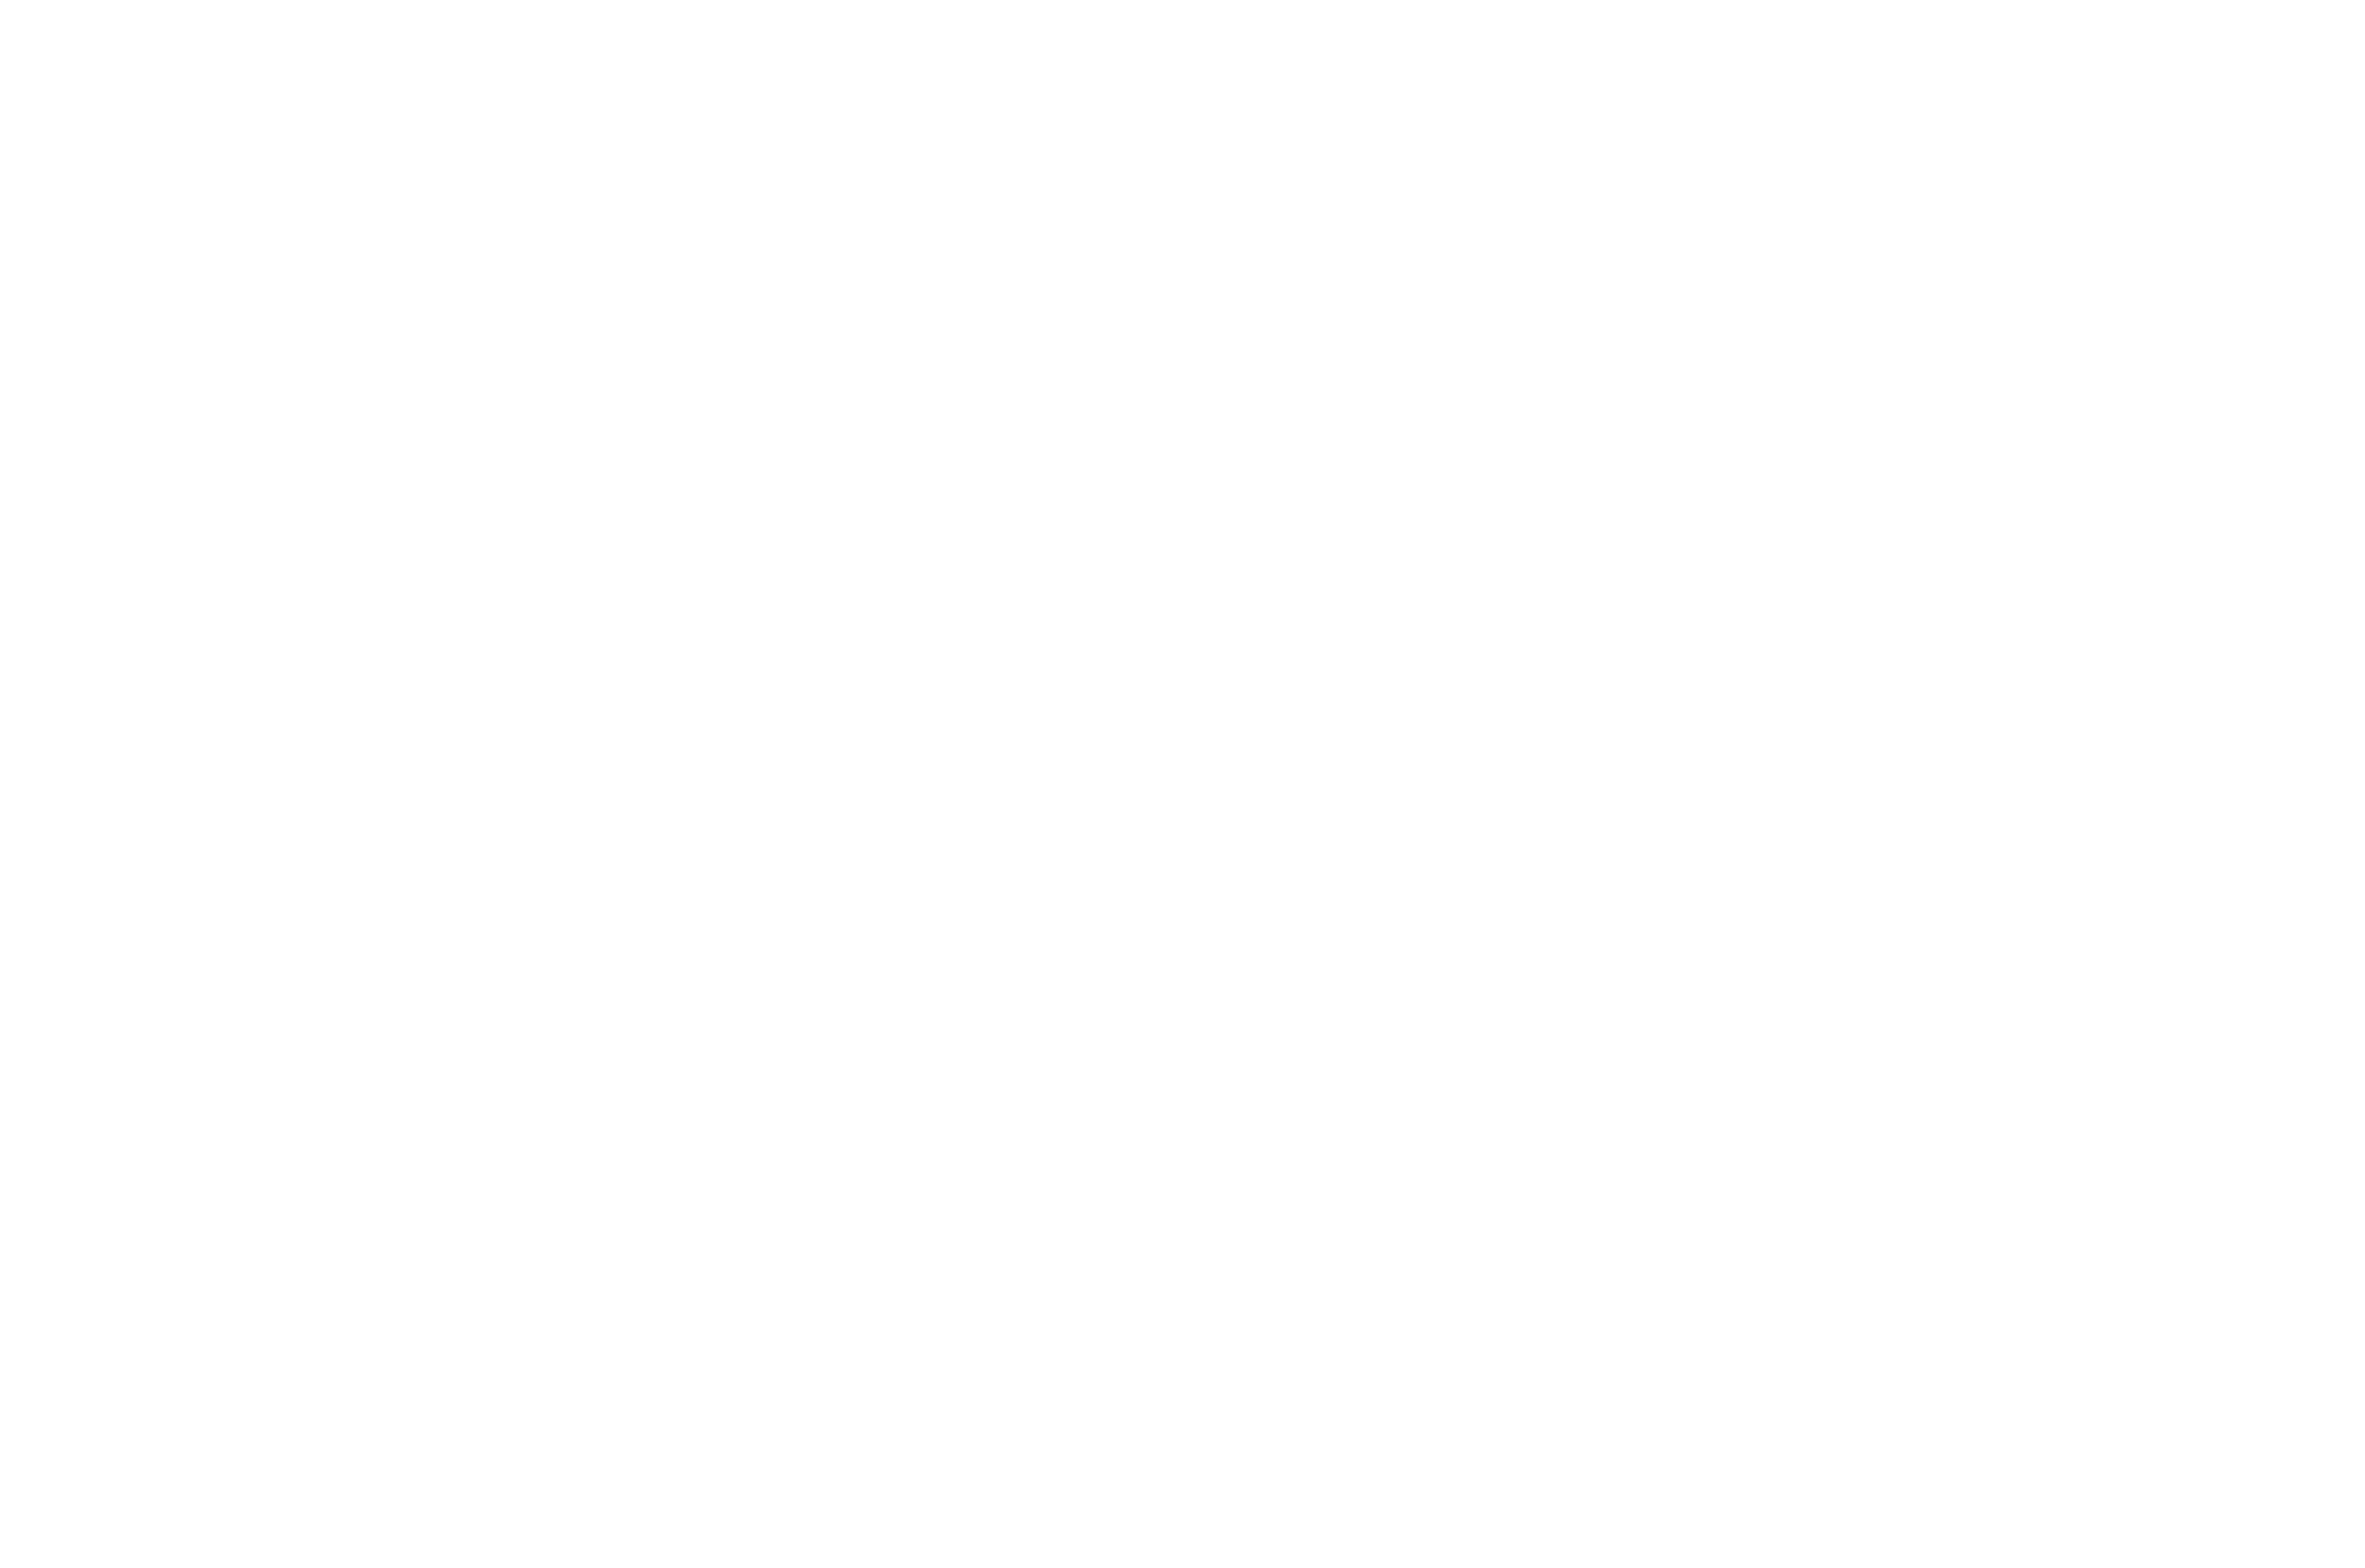 Mo the Movement